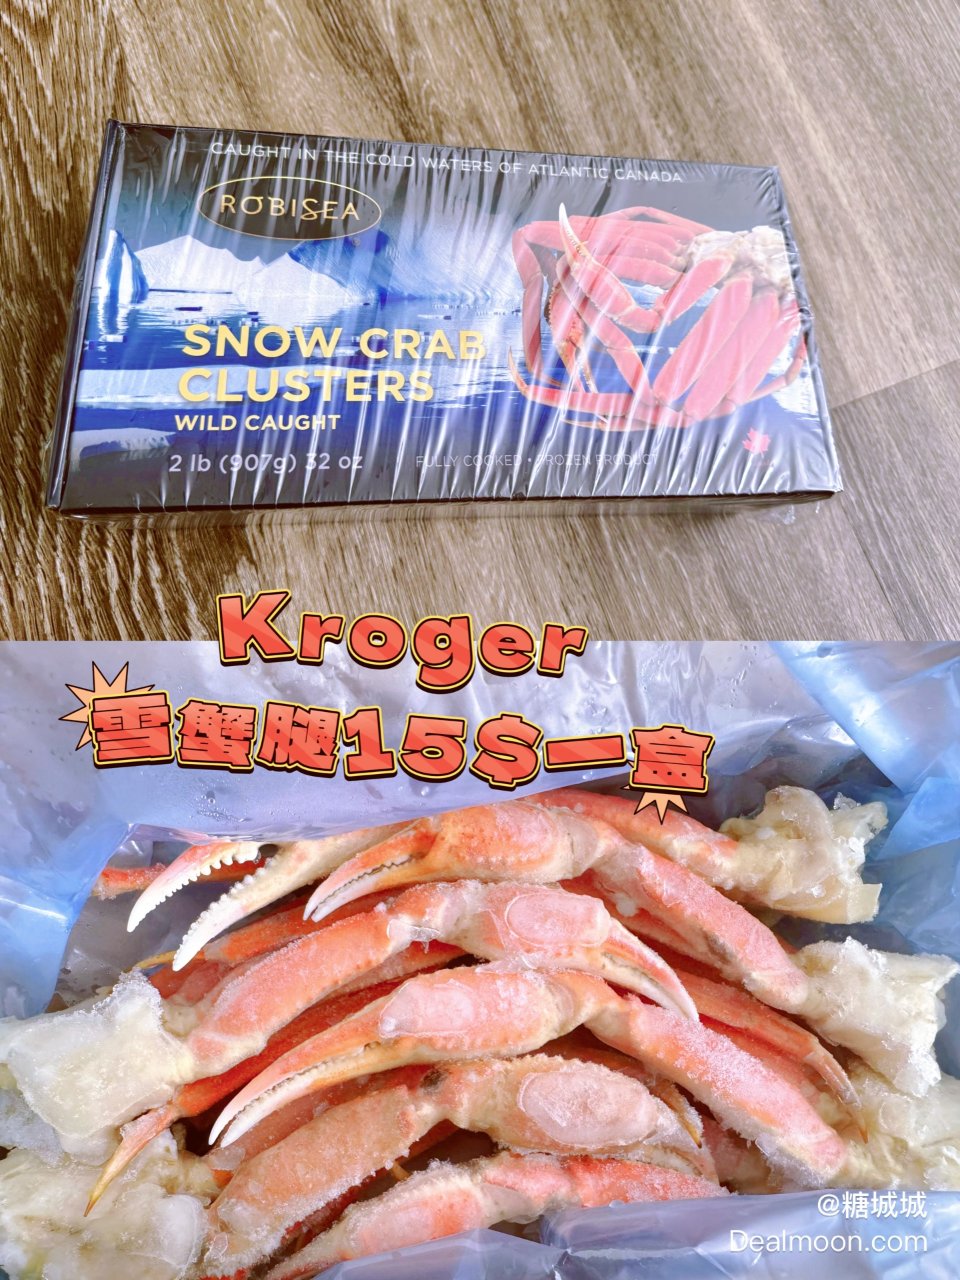 Kroger 15$一盒的雪蟹腿...